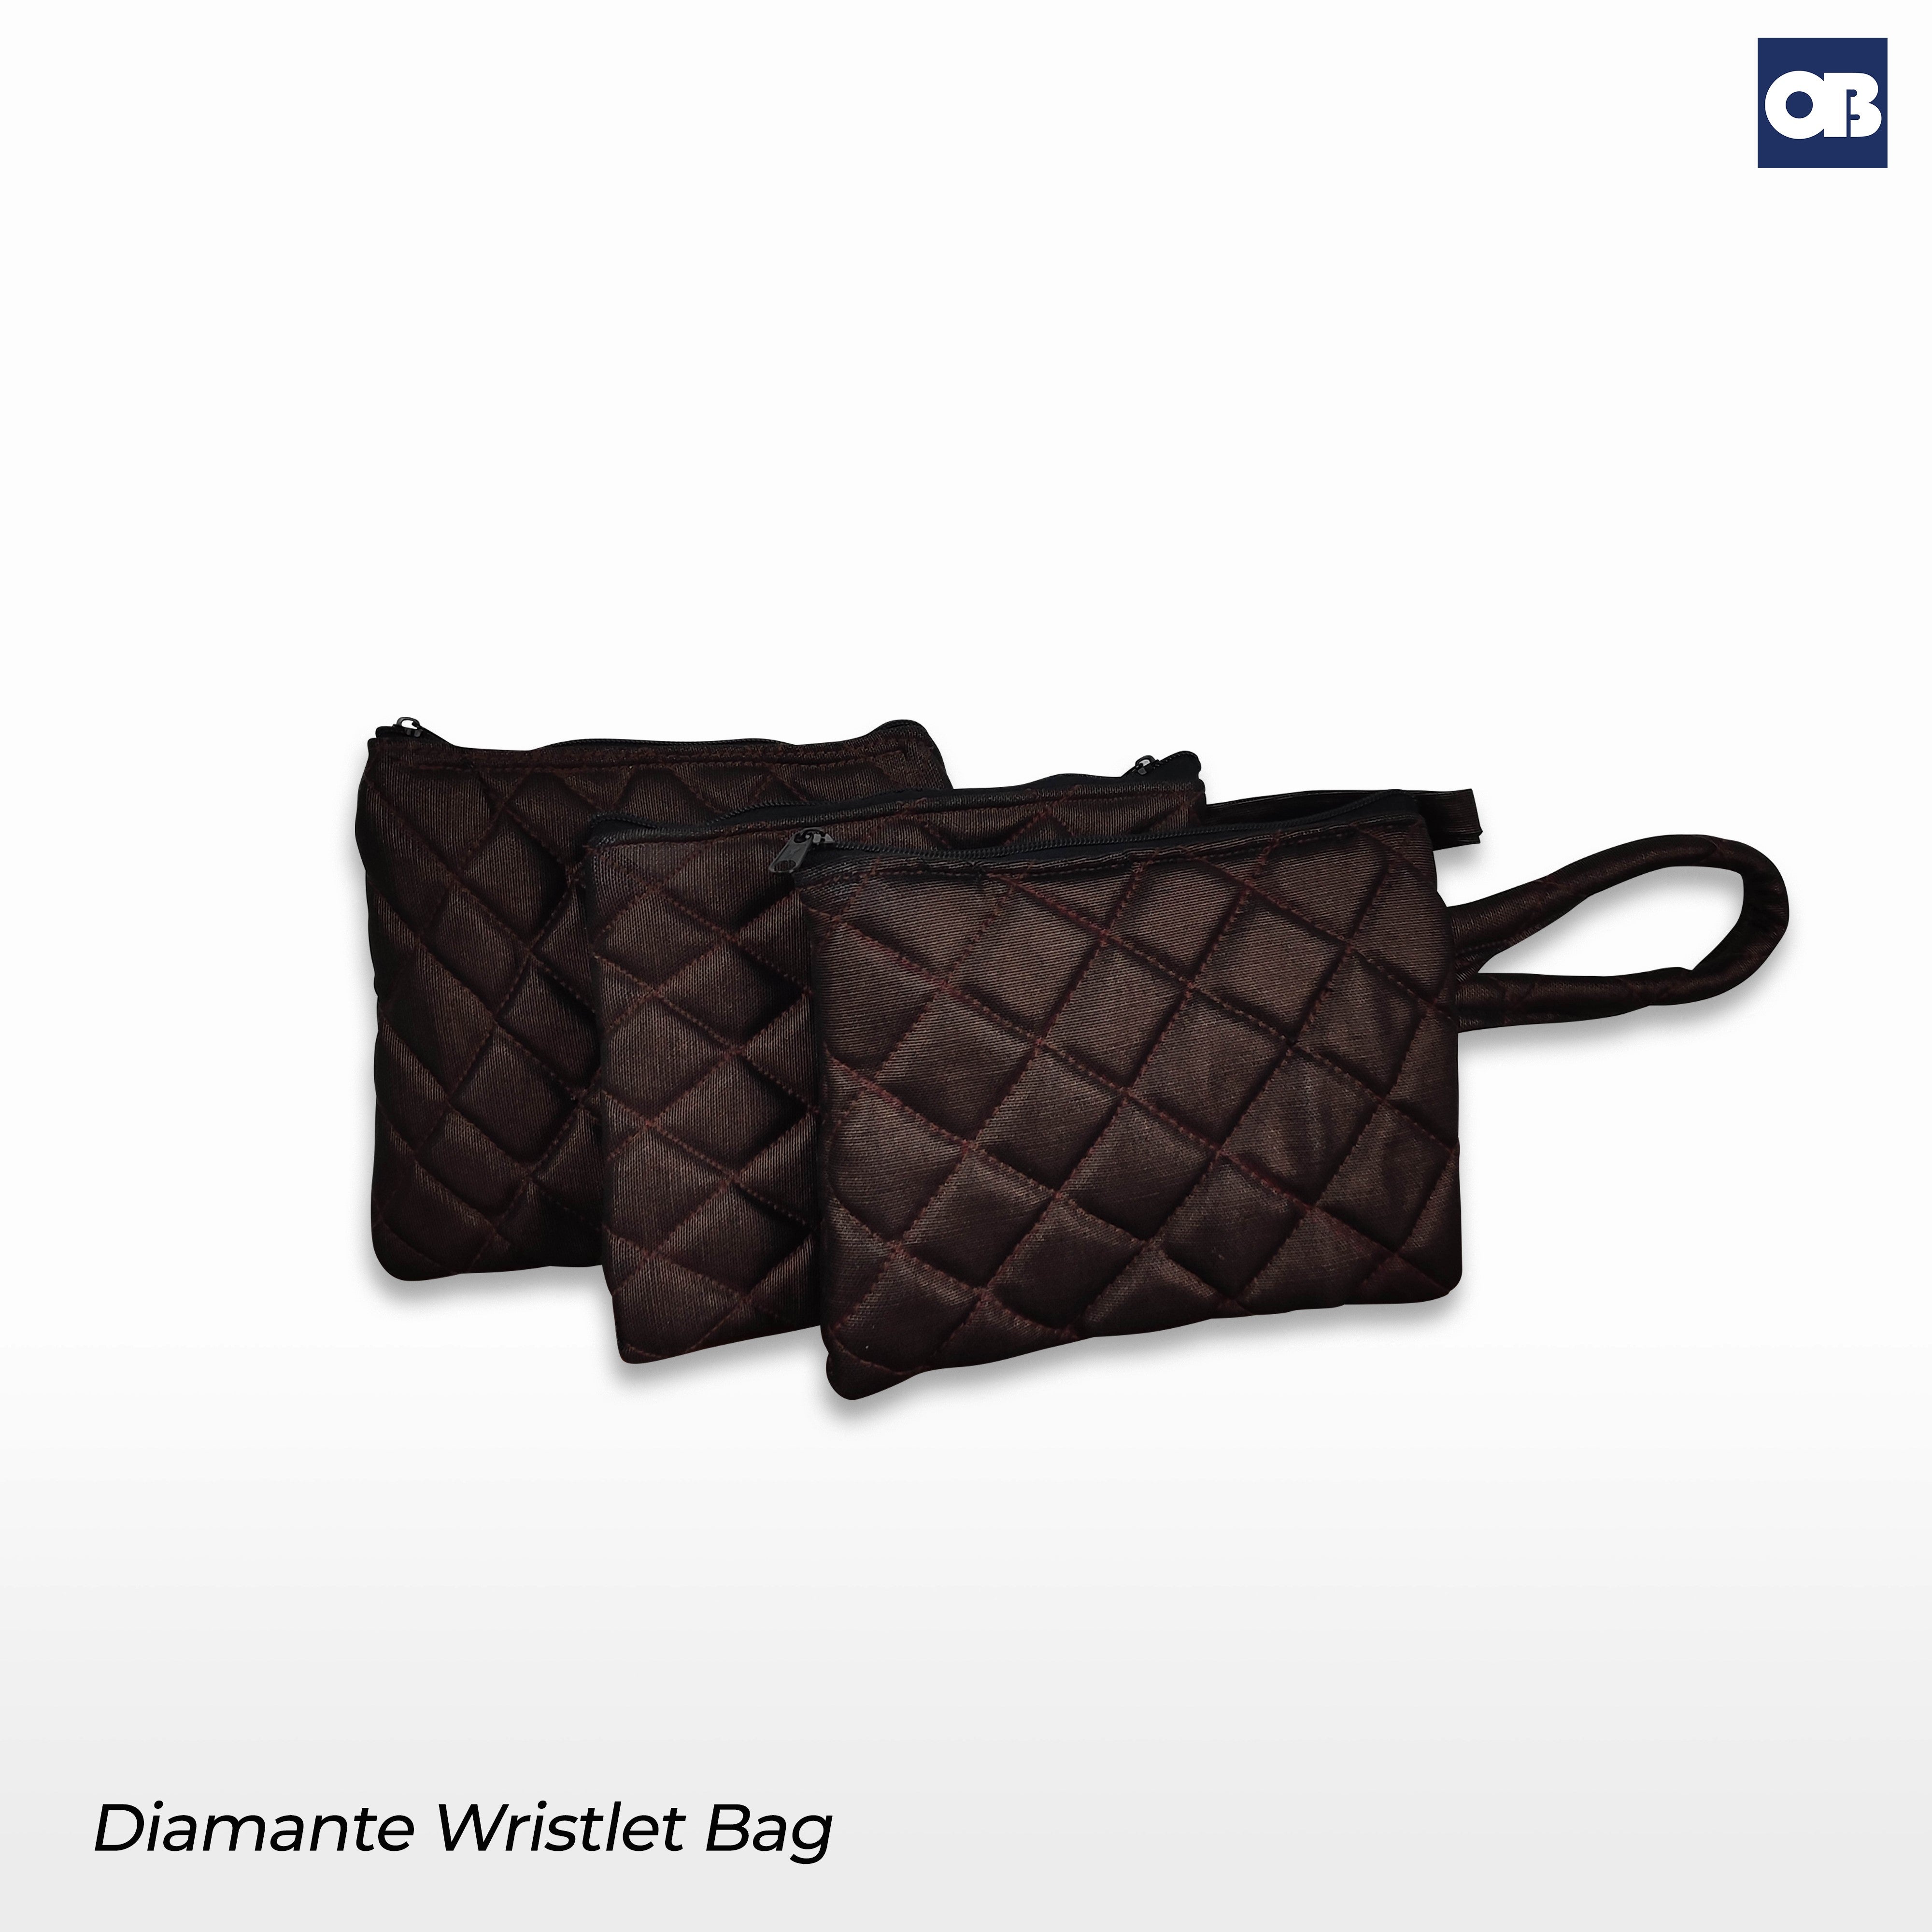 OB Diamante Wristlet Bag